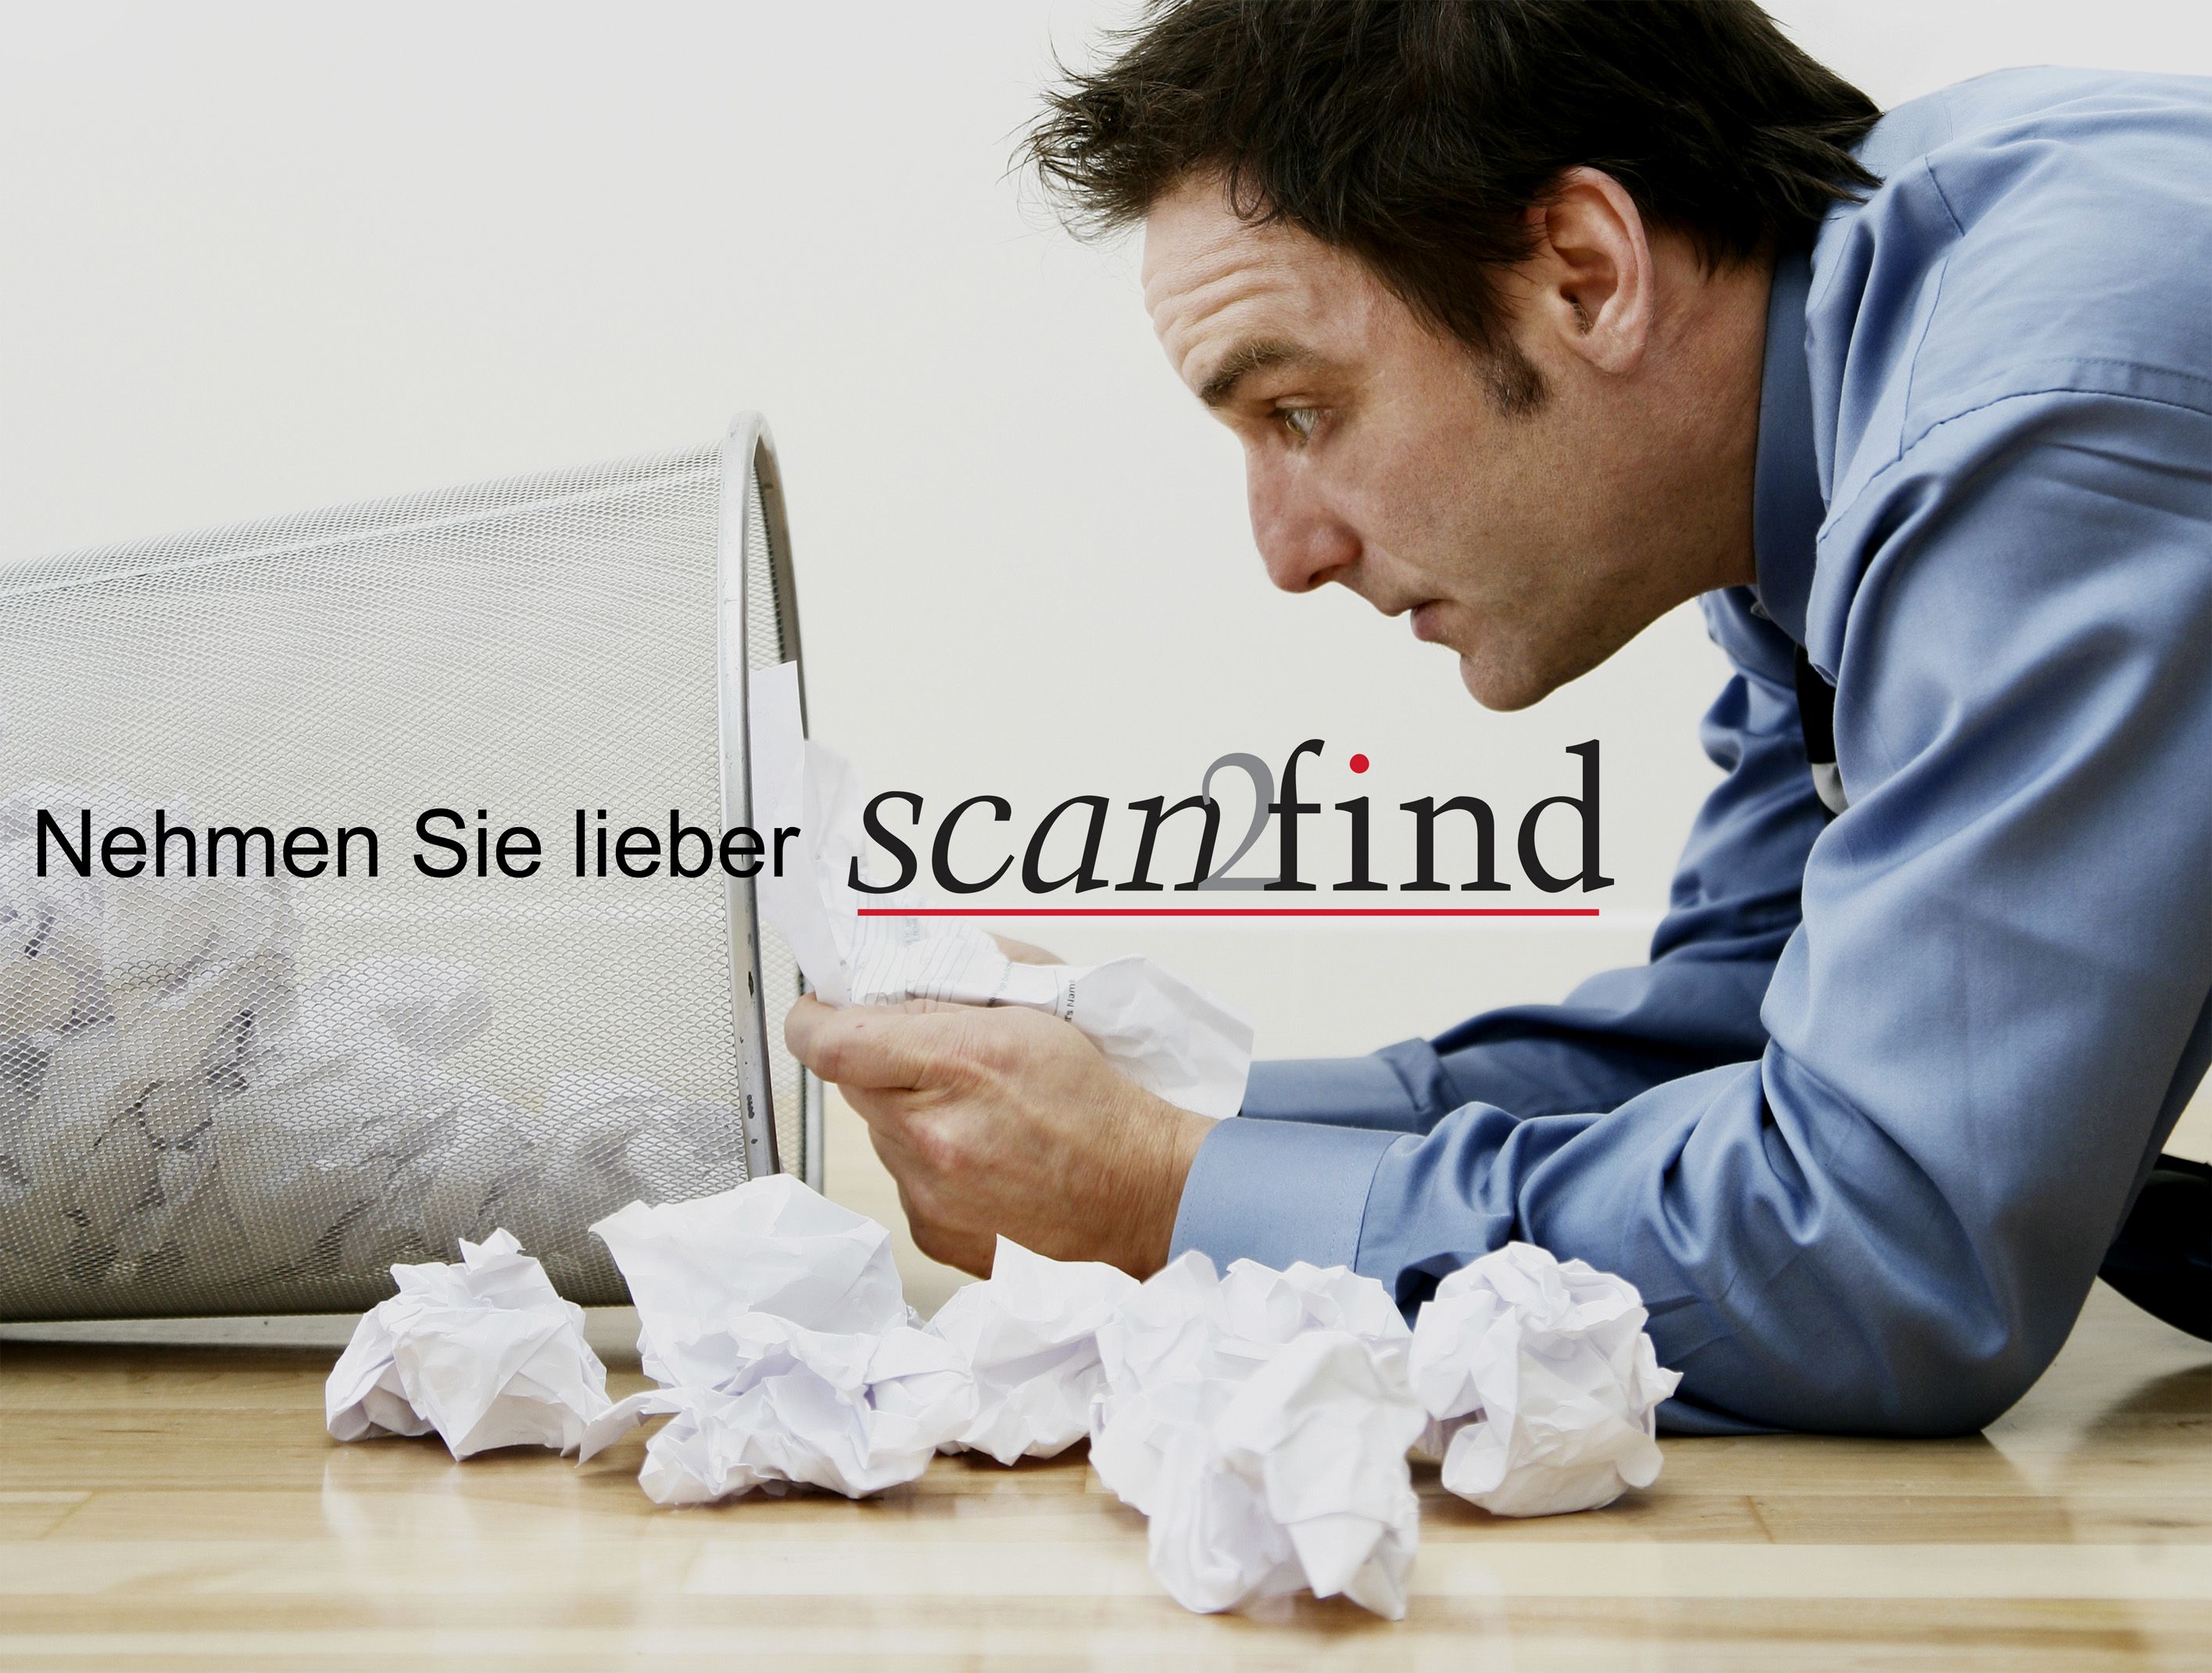 scan2find Dokumentenmanagement, ASPOA